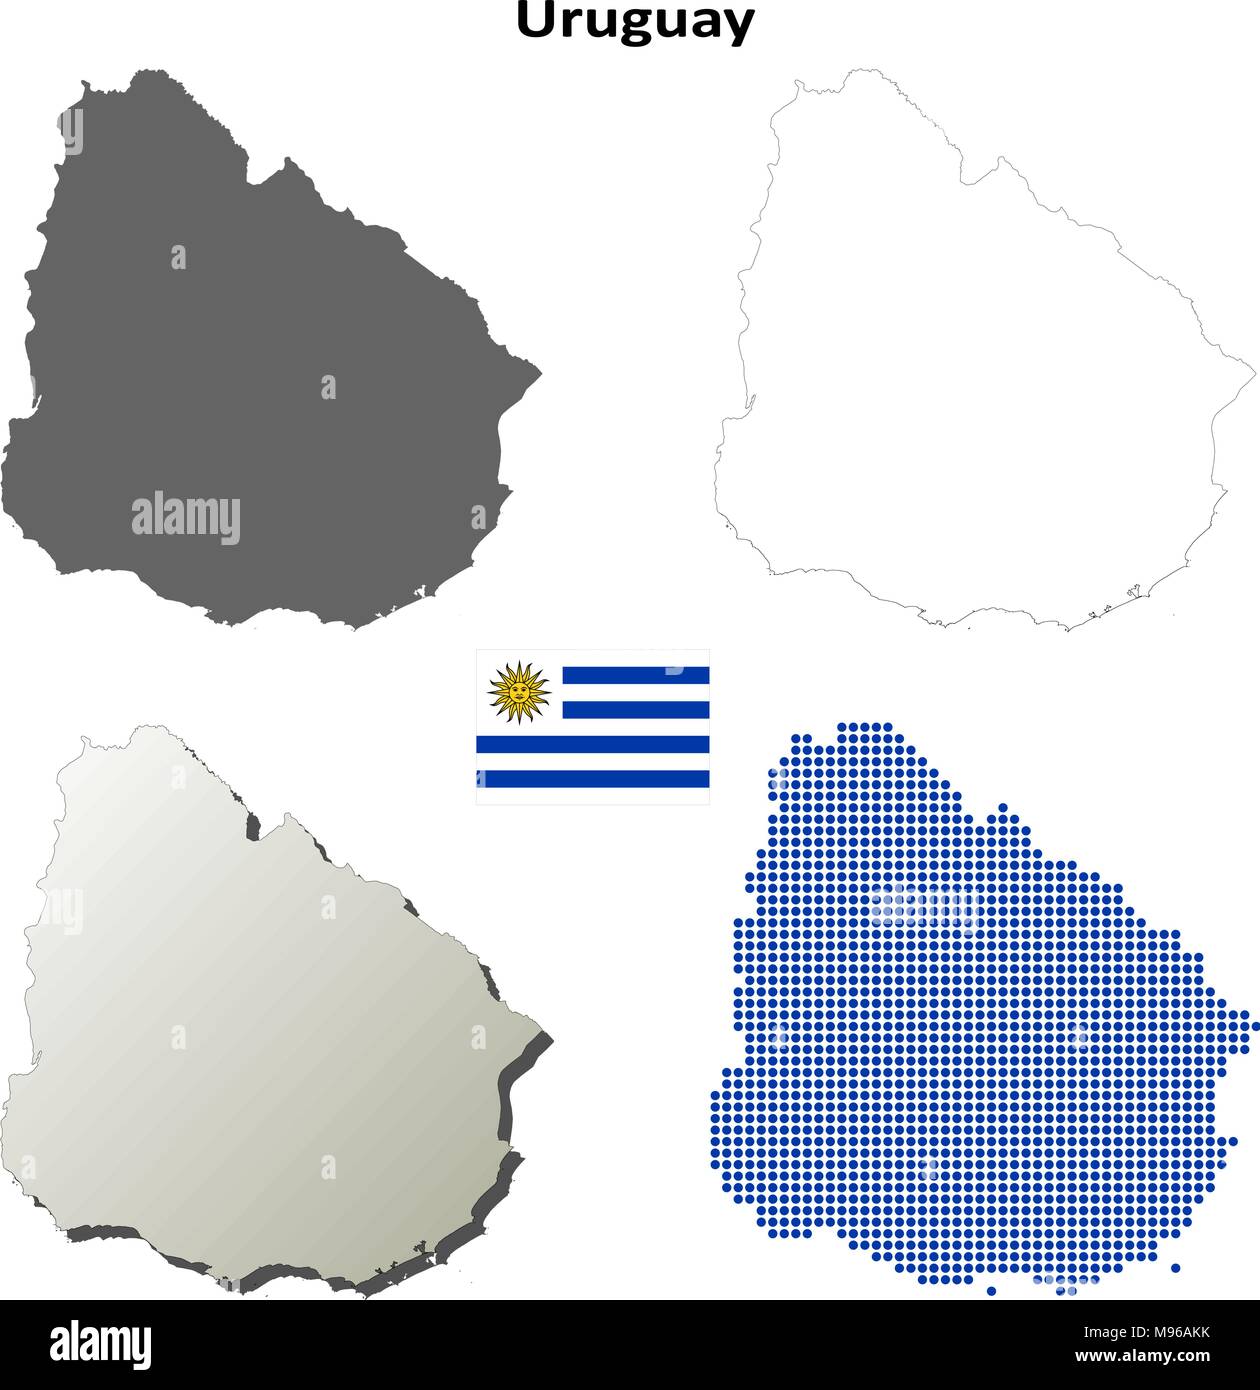 Uruguay outline map set Stock Vector